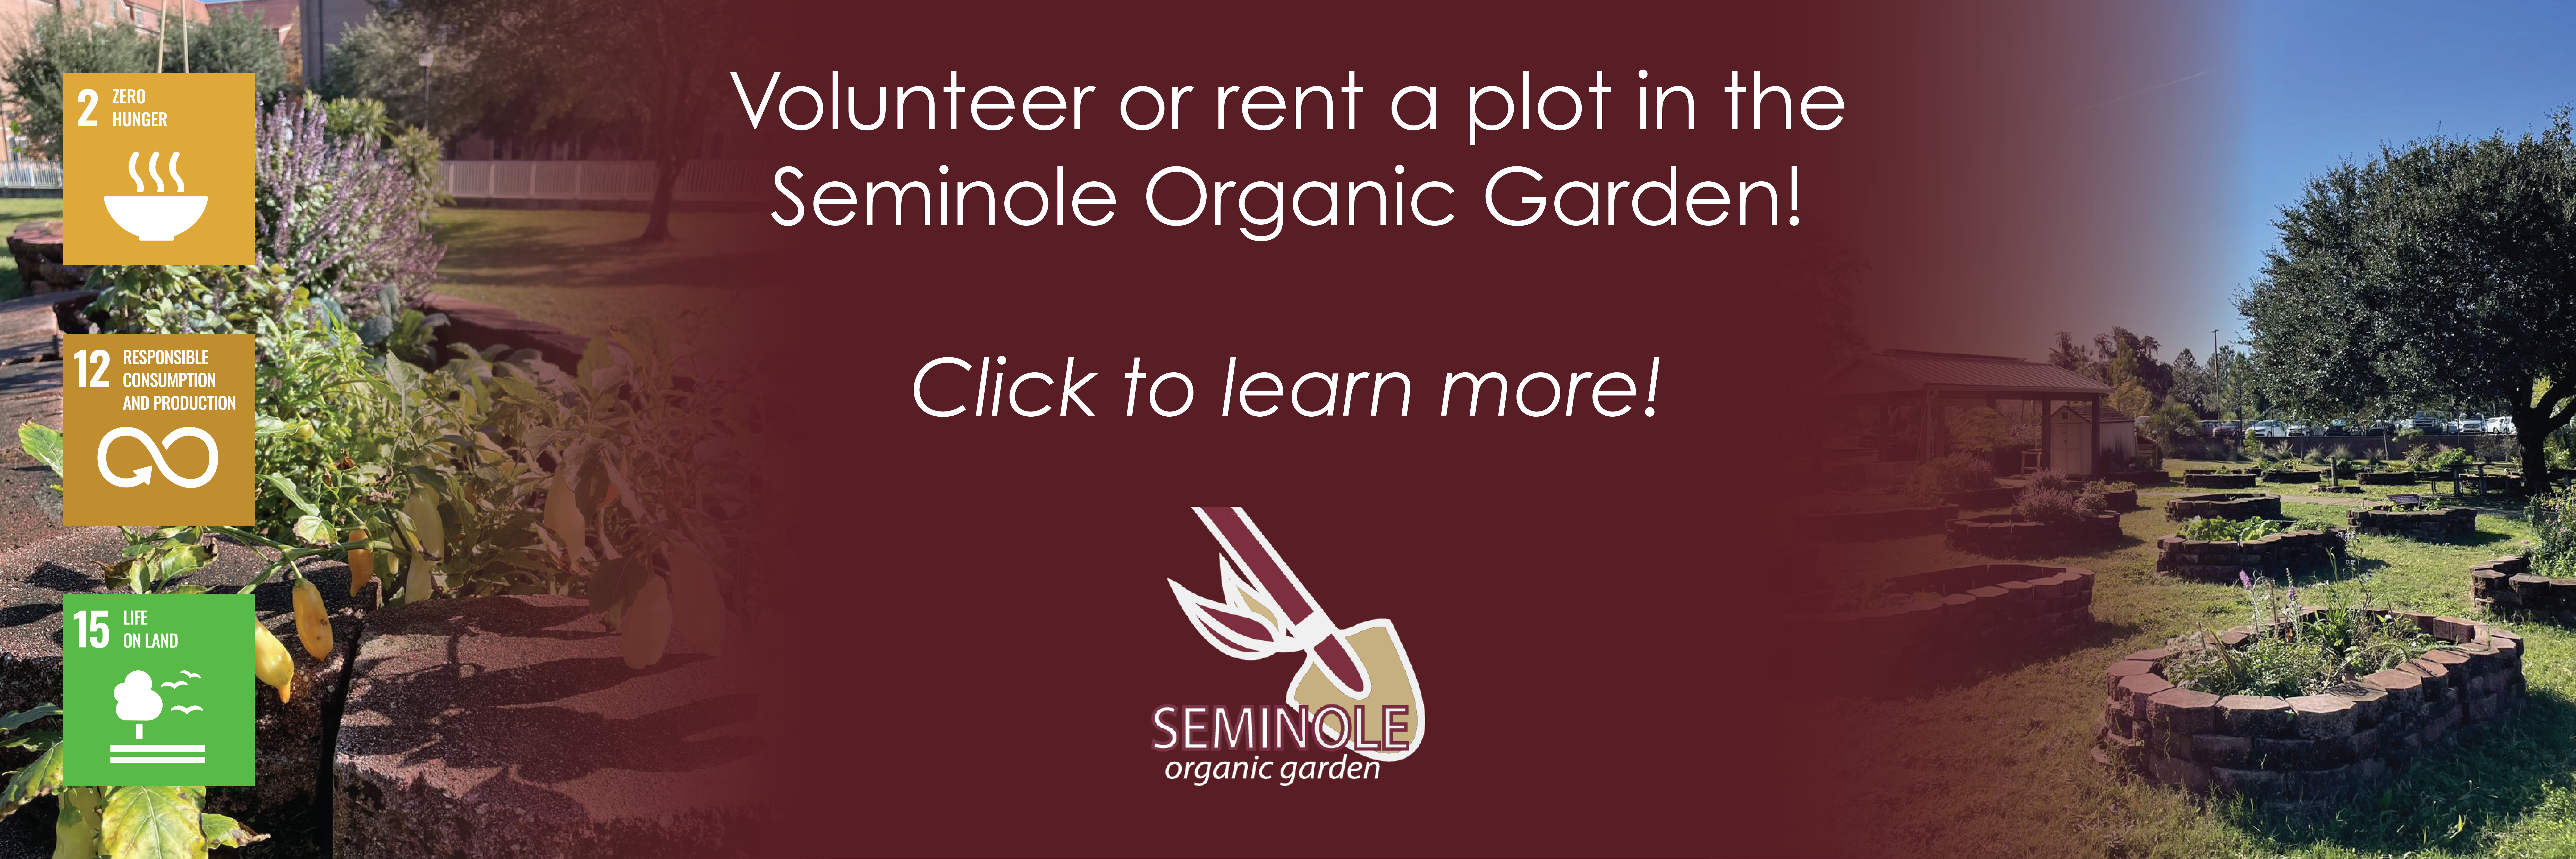 Seminole Organic Garden